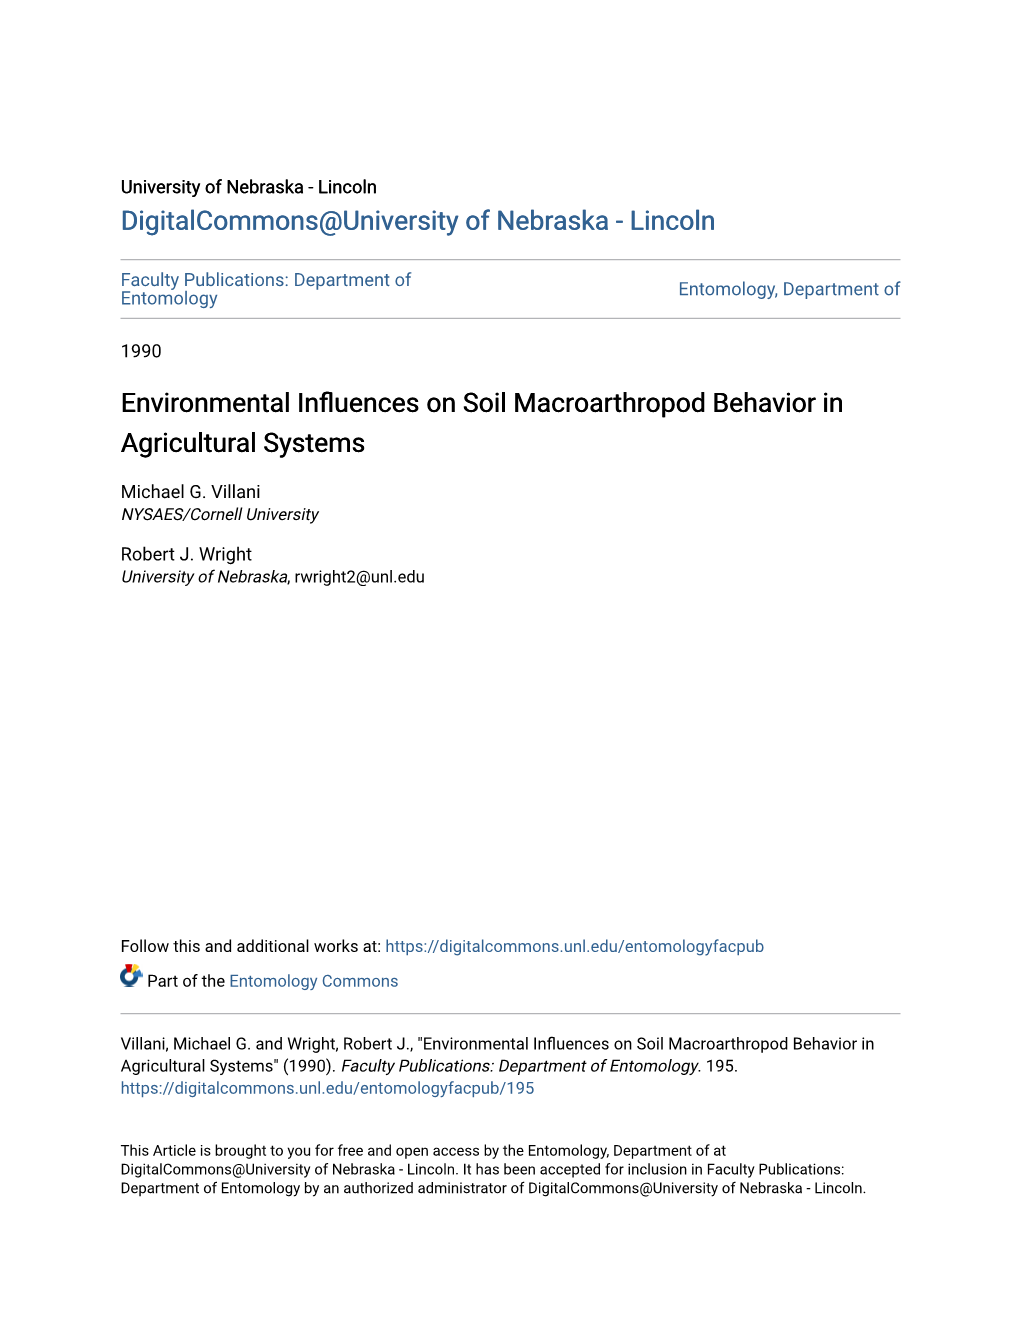 Environmental Influences on Soil Macroarthropod Behavior in Agricultural Systems